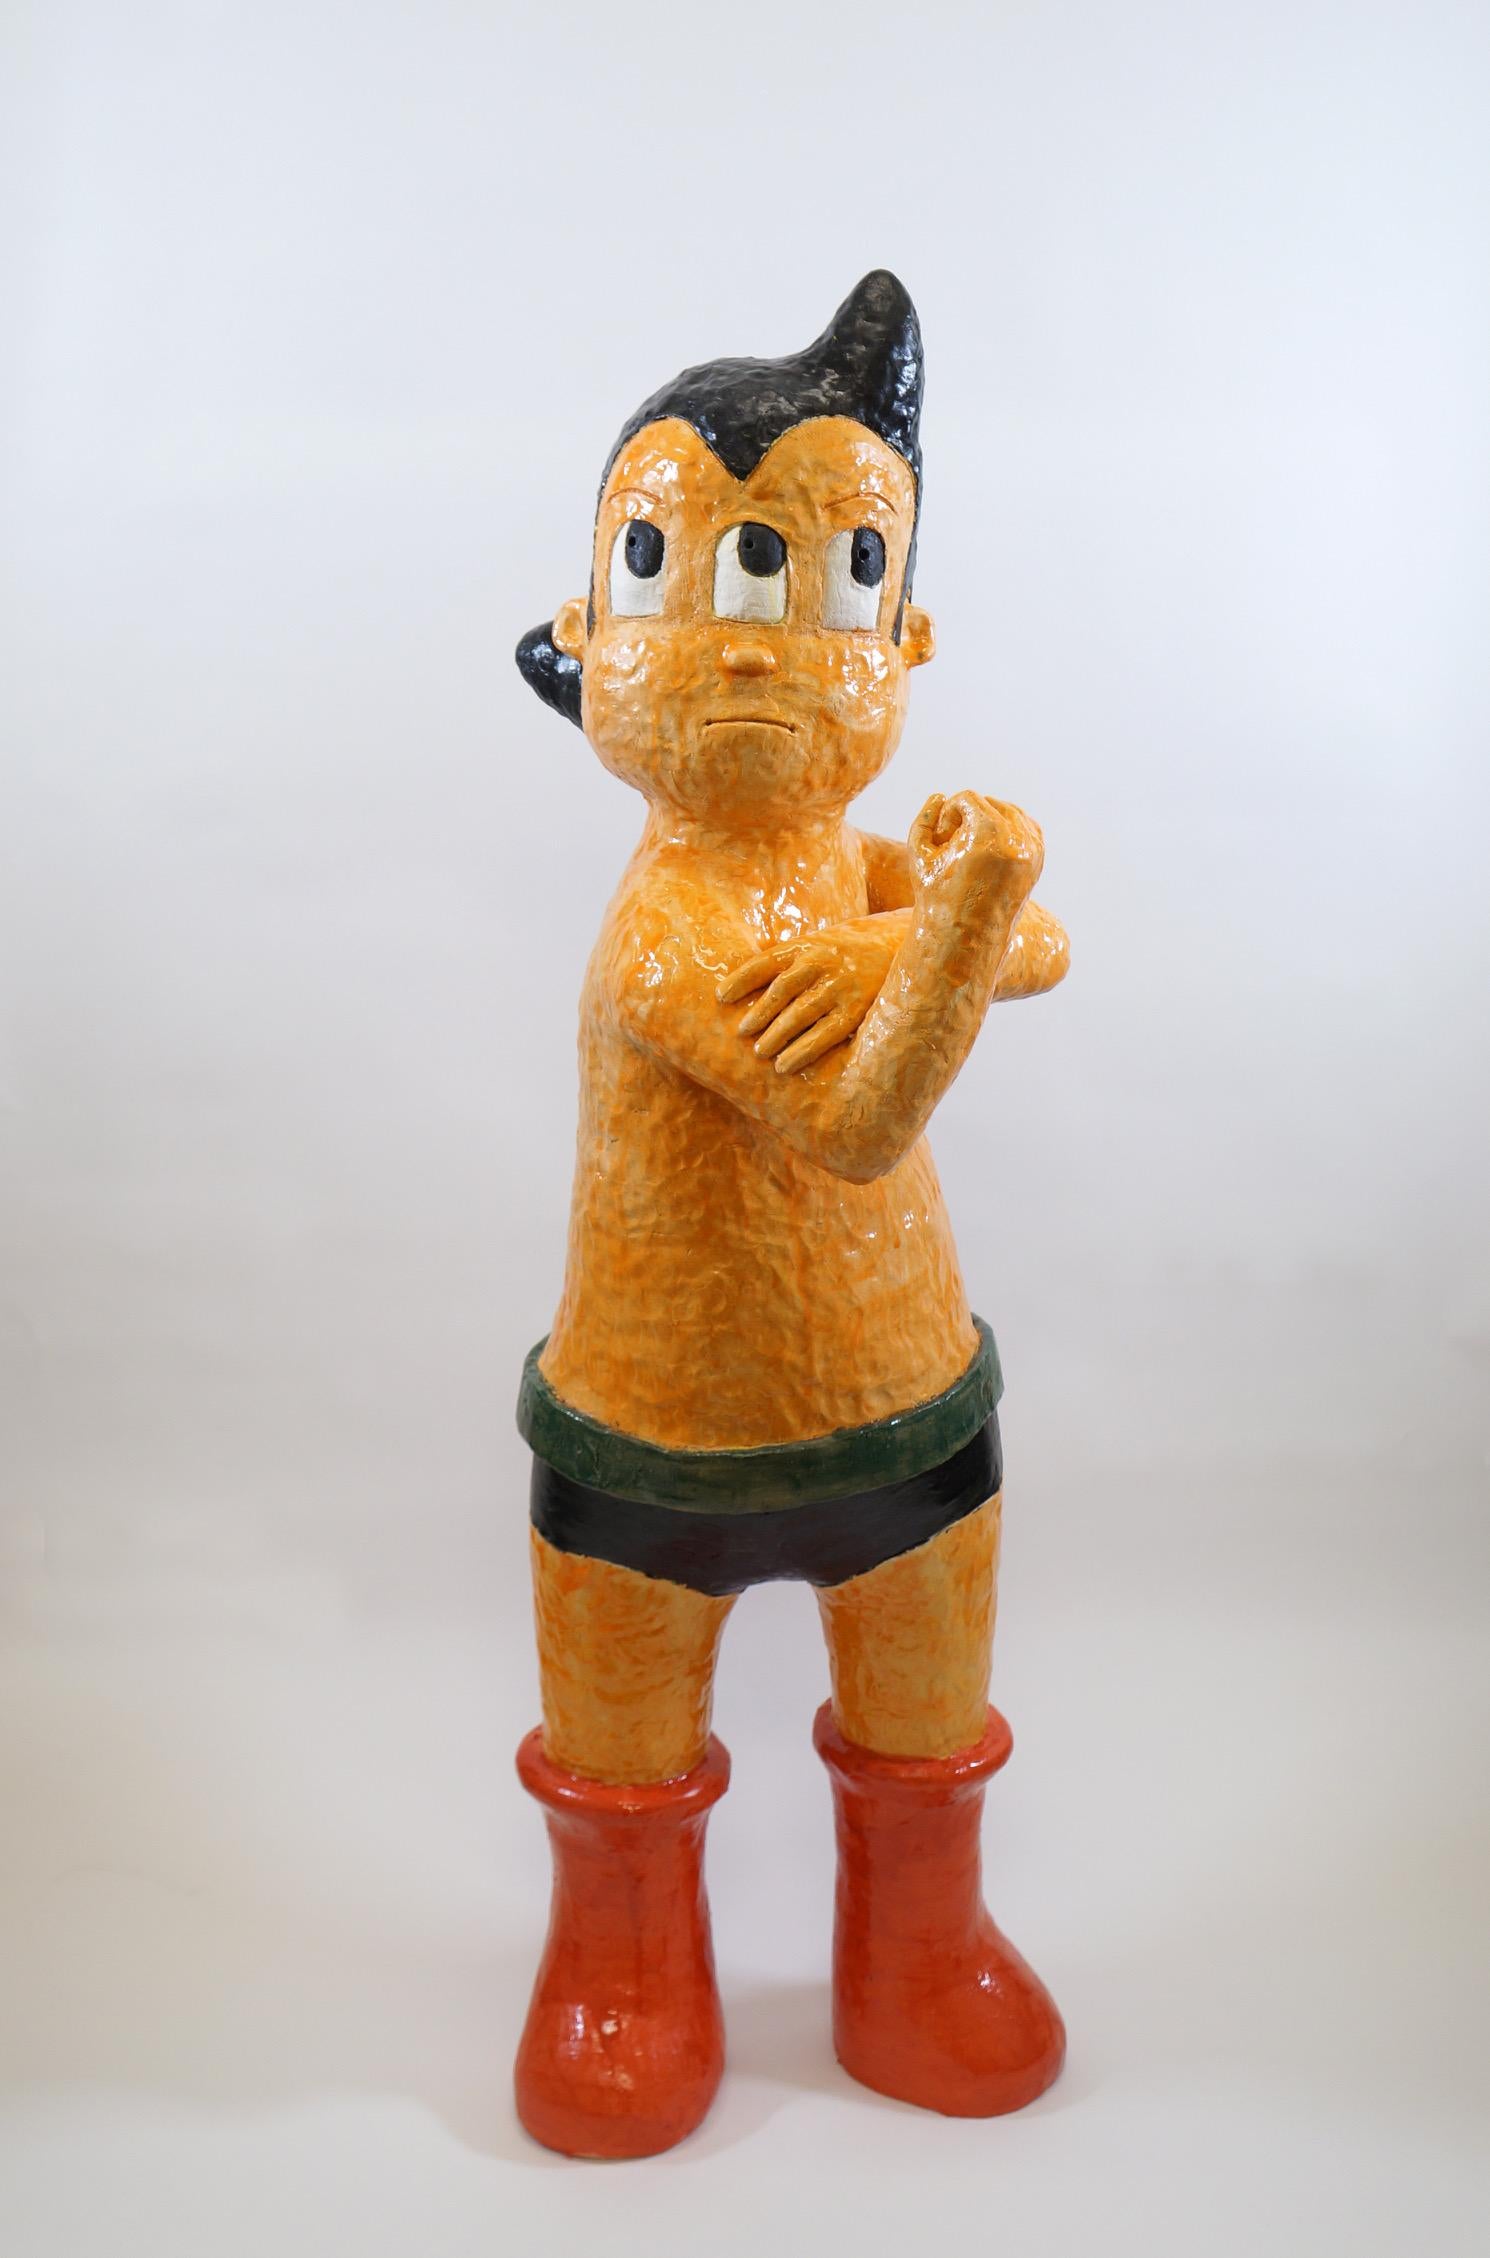 Kensuke Yamada Figurative Sculpture - "Astroboy", Figurative, Ceramic, Sculpture, Stoneware and Glaze, Life Size